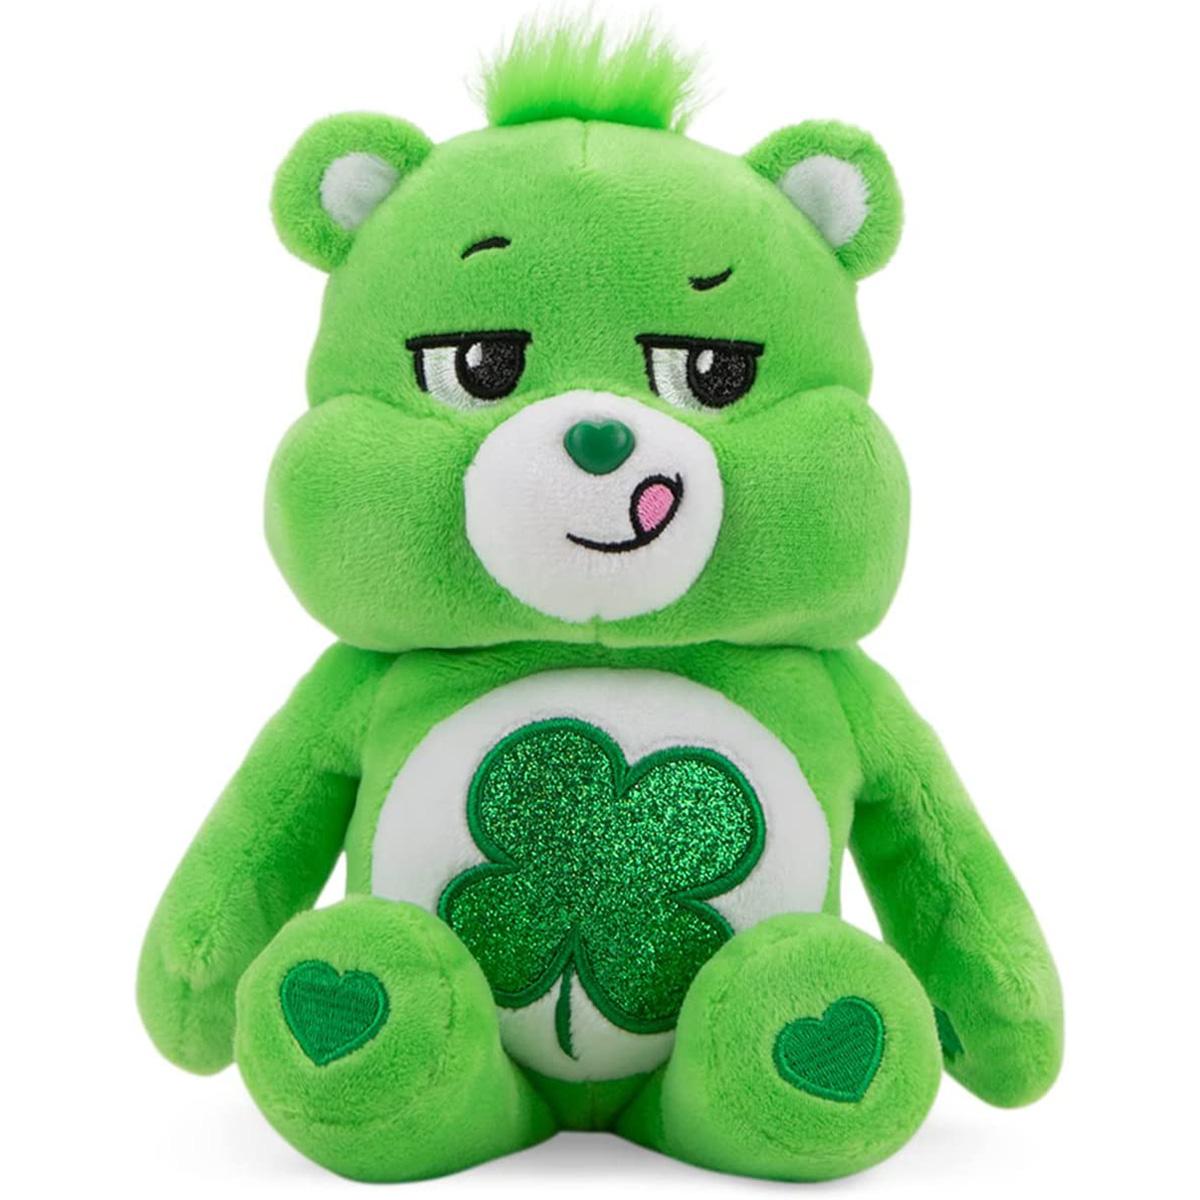 Glitter Belly Care Bears Bean Plush Stuffed Animals for $5.99